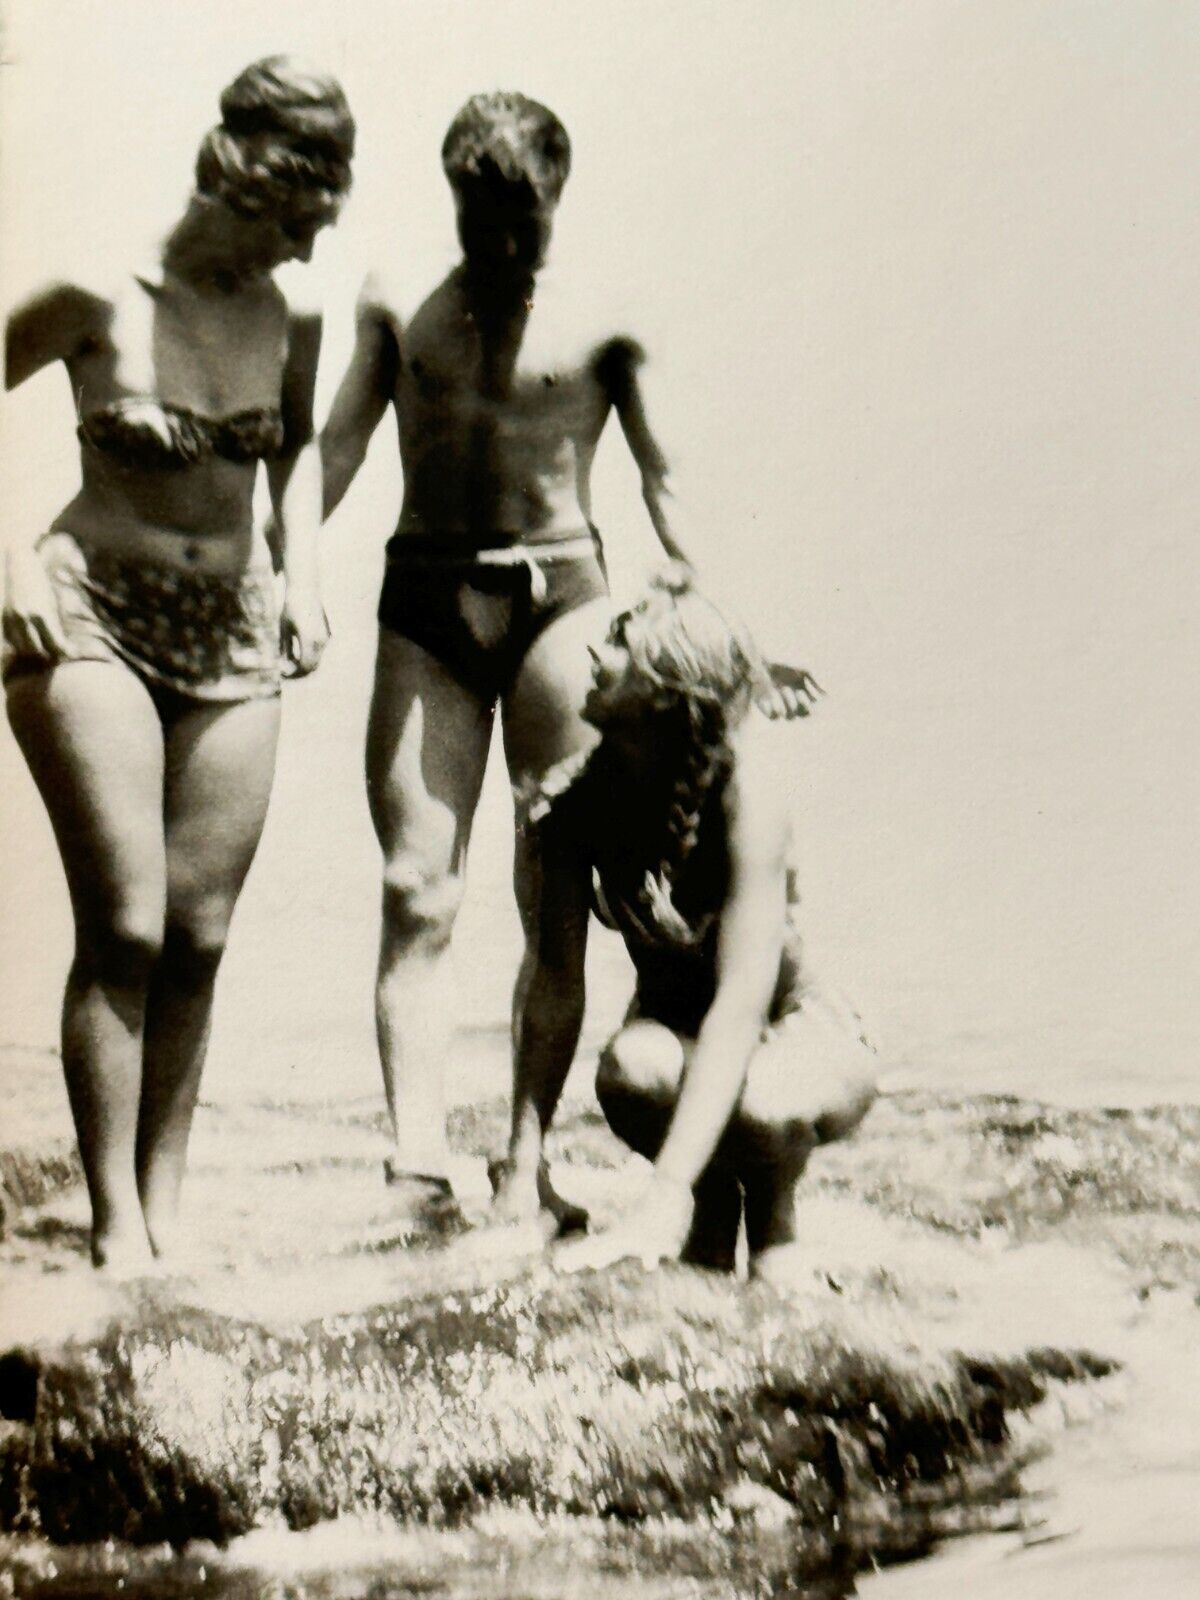 1964 Shirtless Man Trunks Bulge Gay int Two Curvy Women Beach Vintage Photo